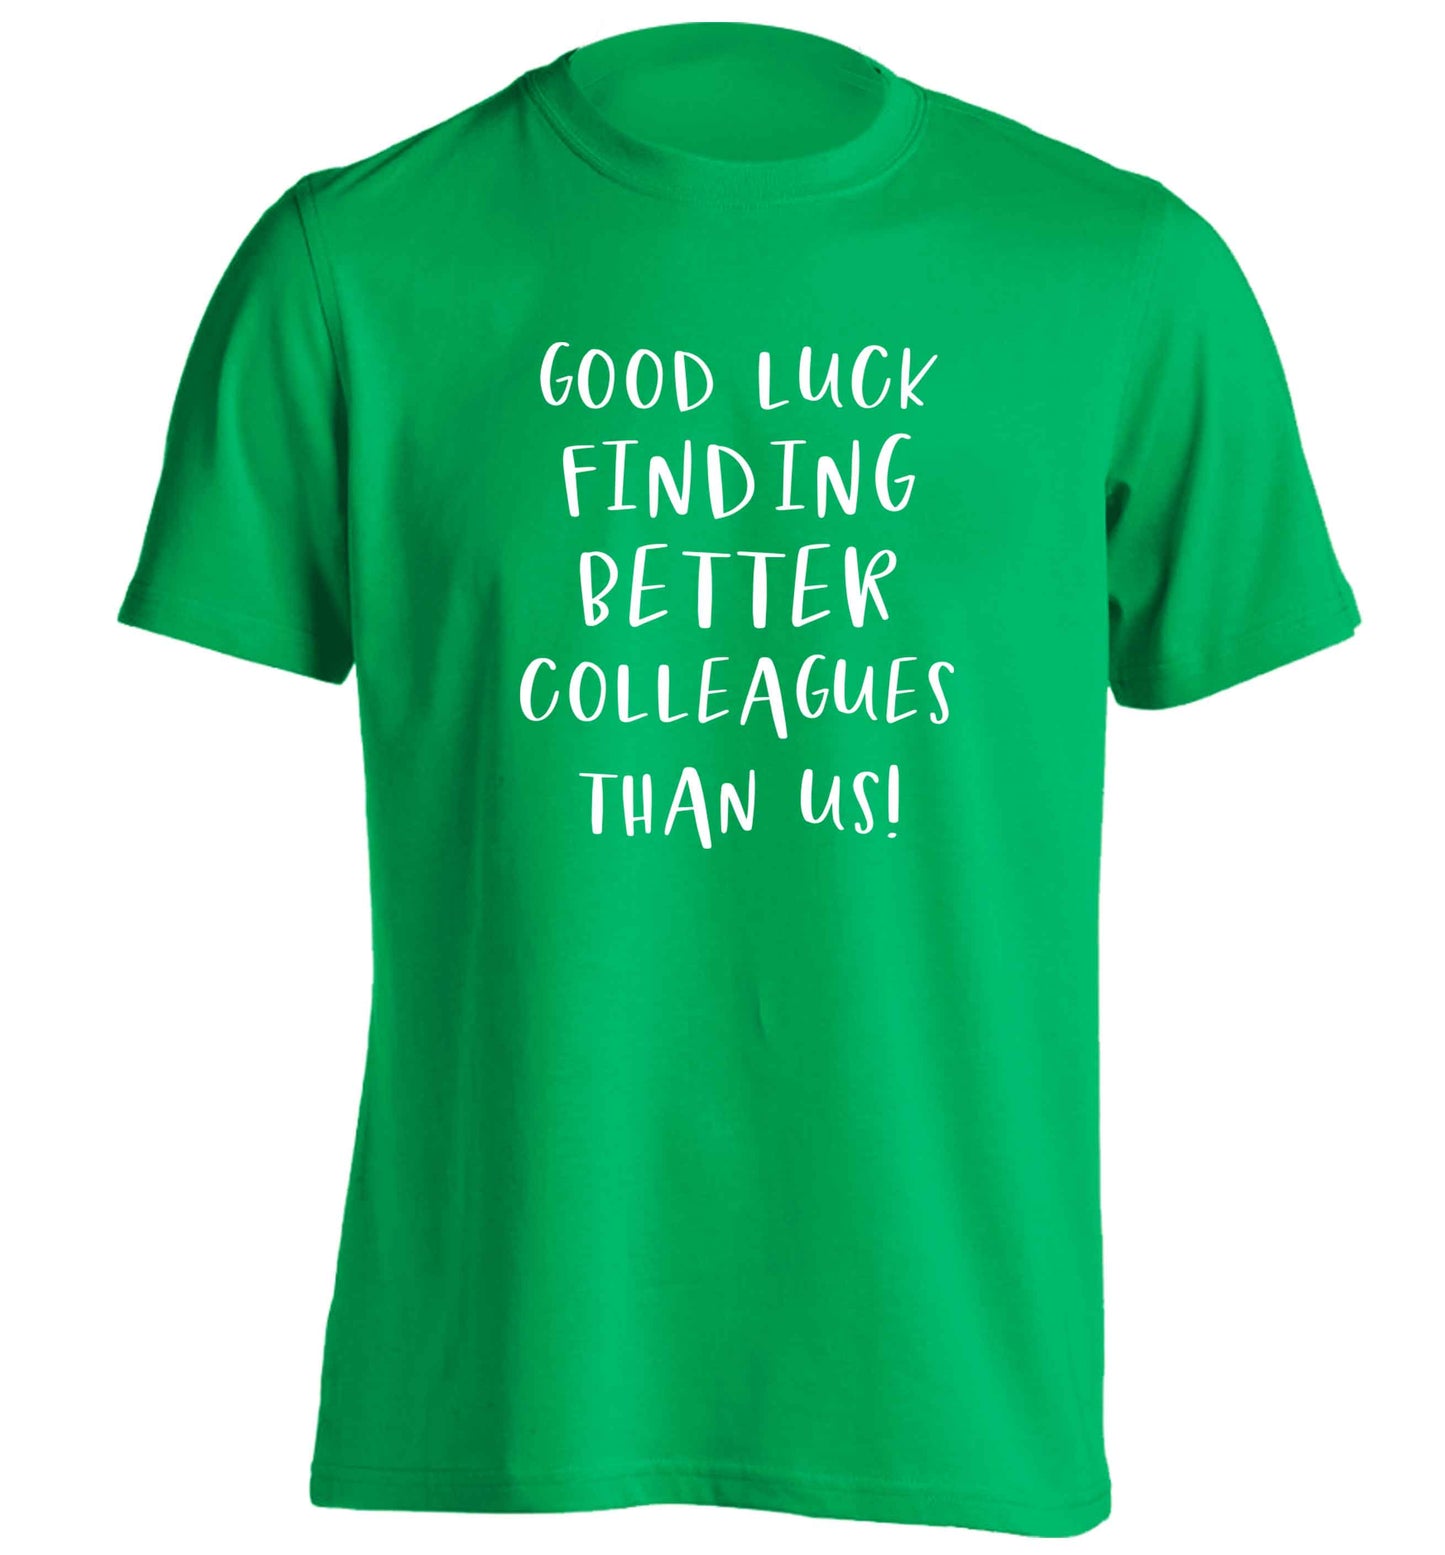 Good luck finding better colleagues than us! adults unisex green Tshirt 2XL